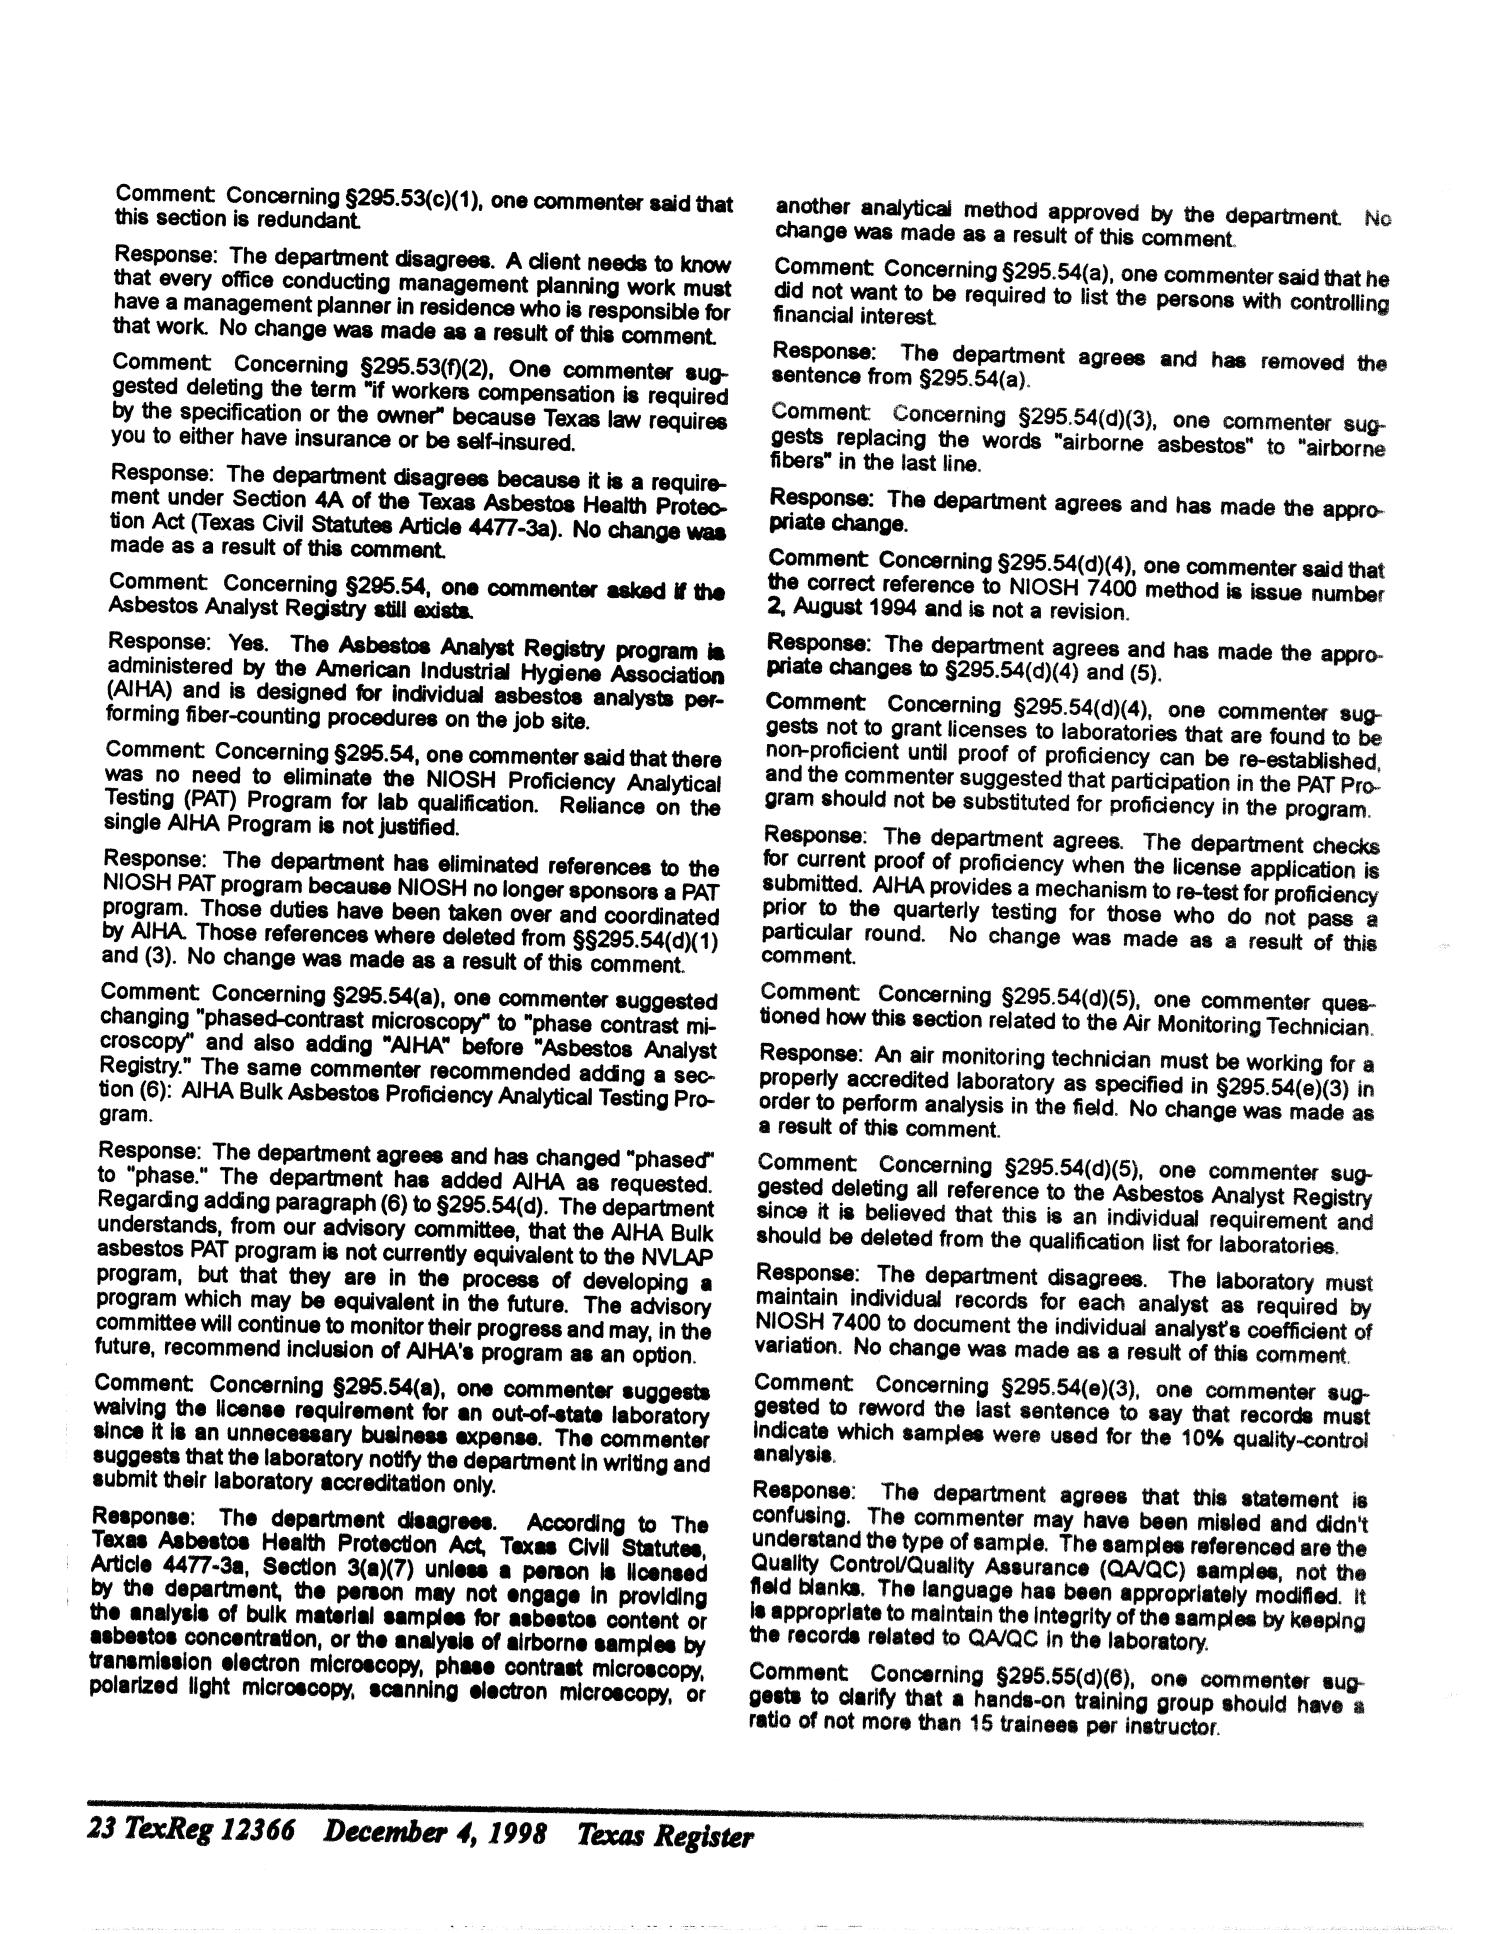 Texas Register, Volume 23, Number 49, Part III, Pages 12311-12450, December 4, 1998
                                                
                                                    12366
                                                